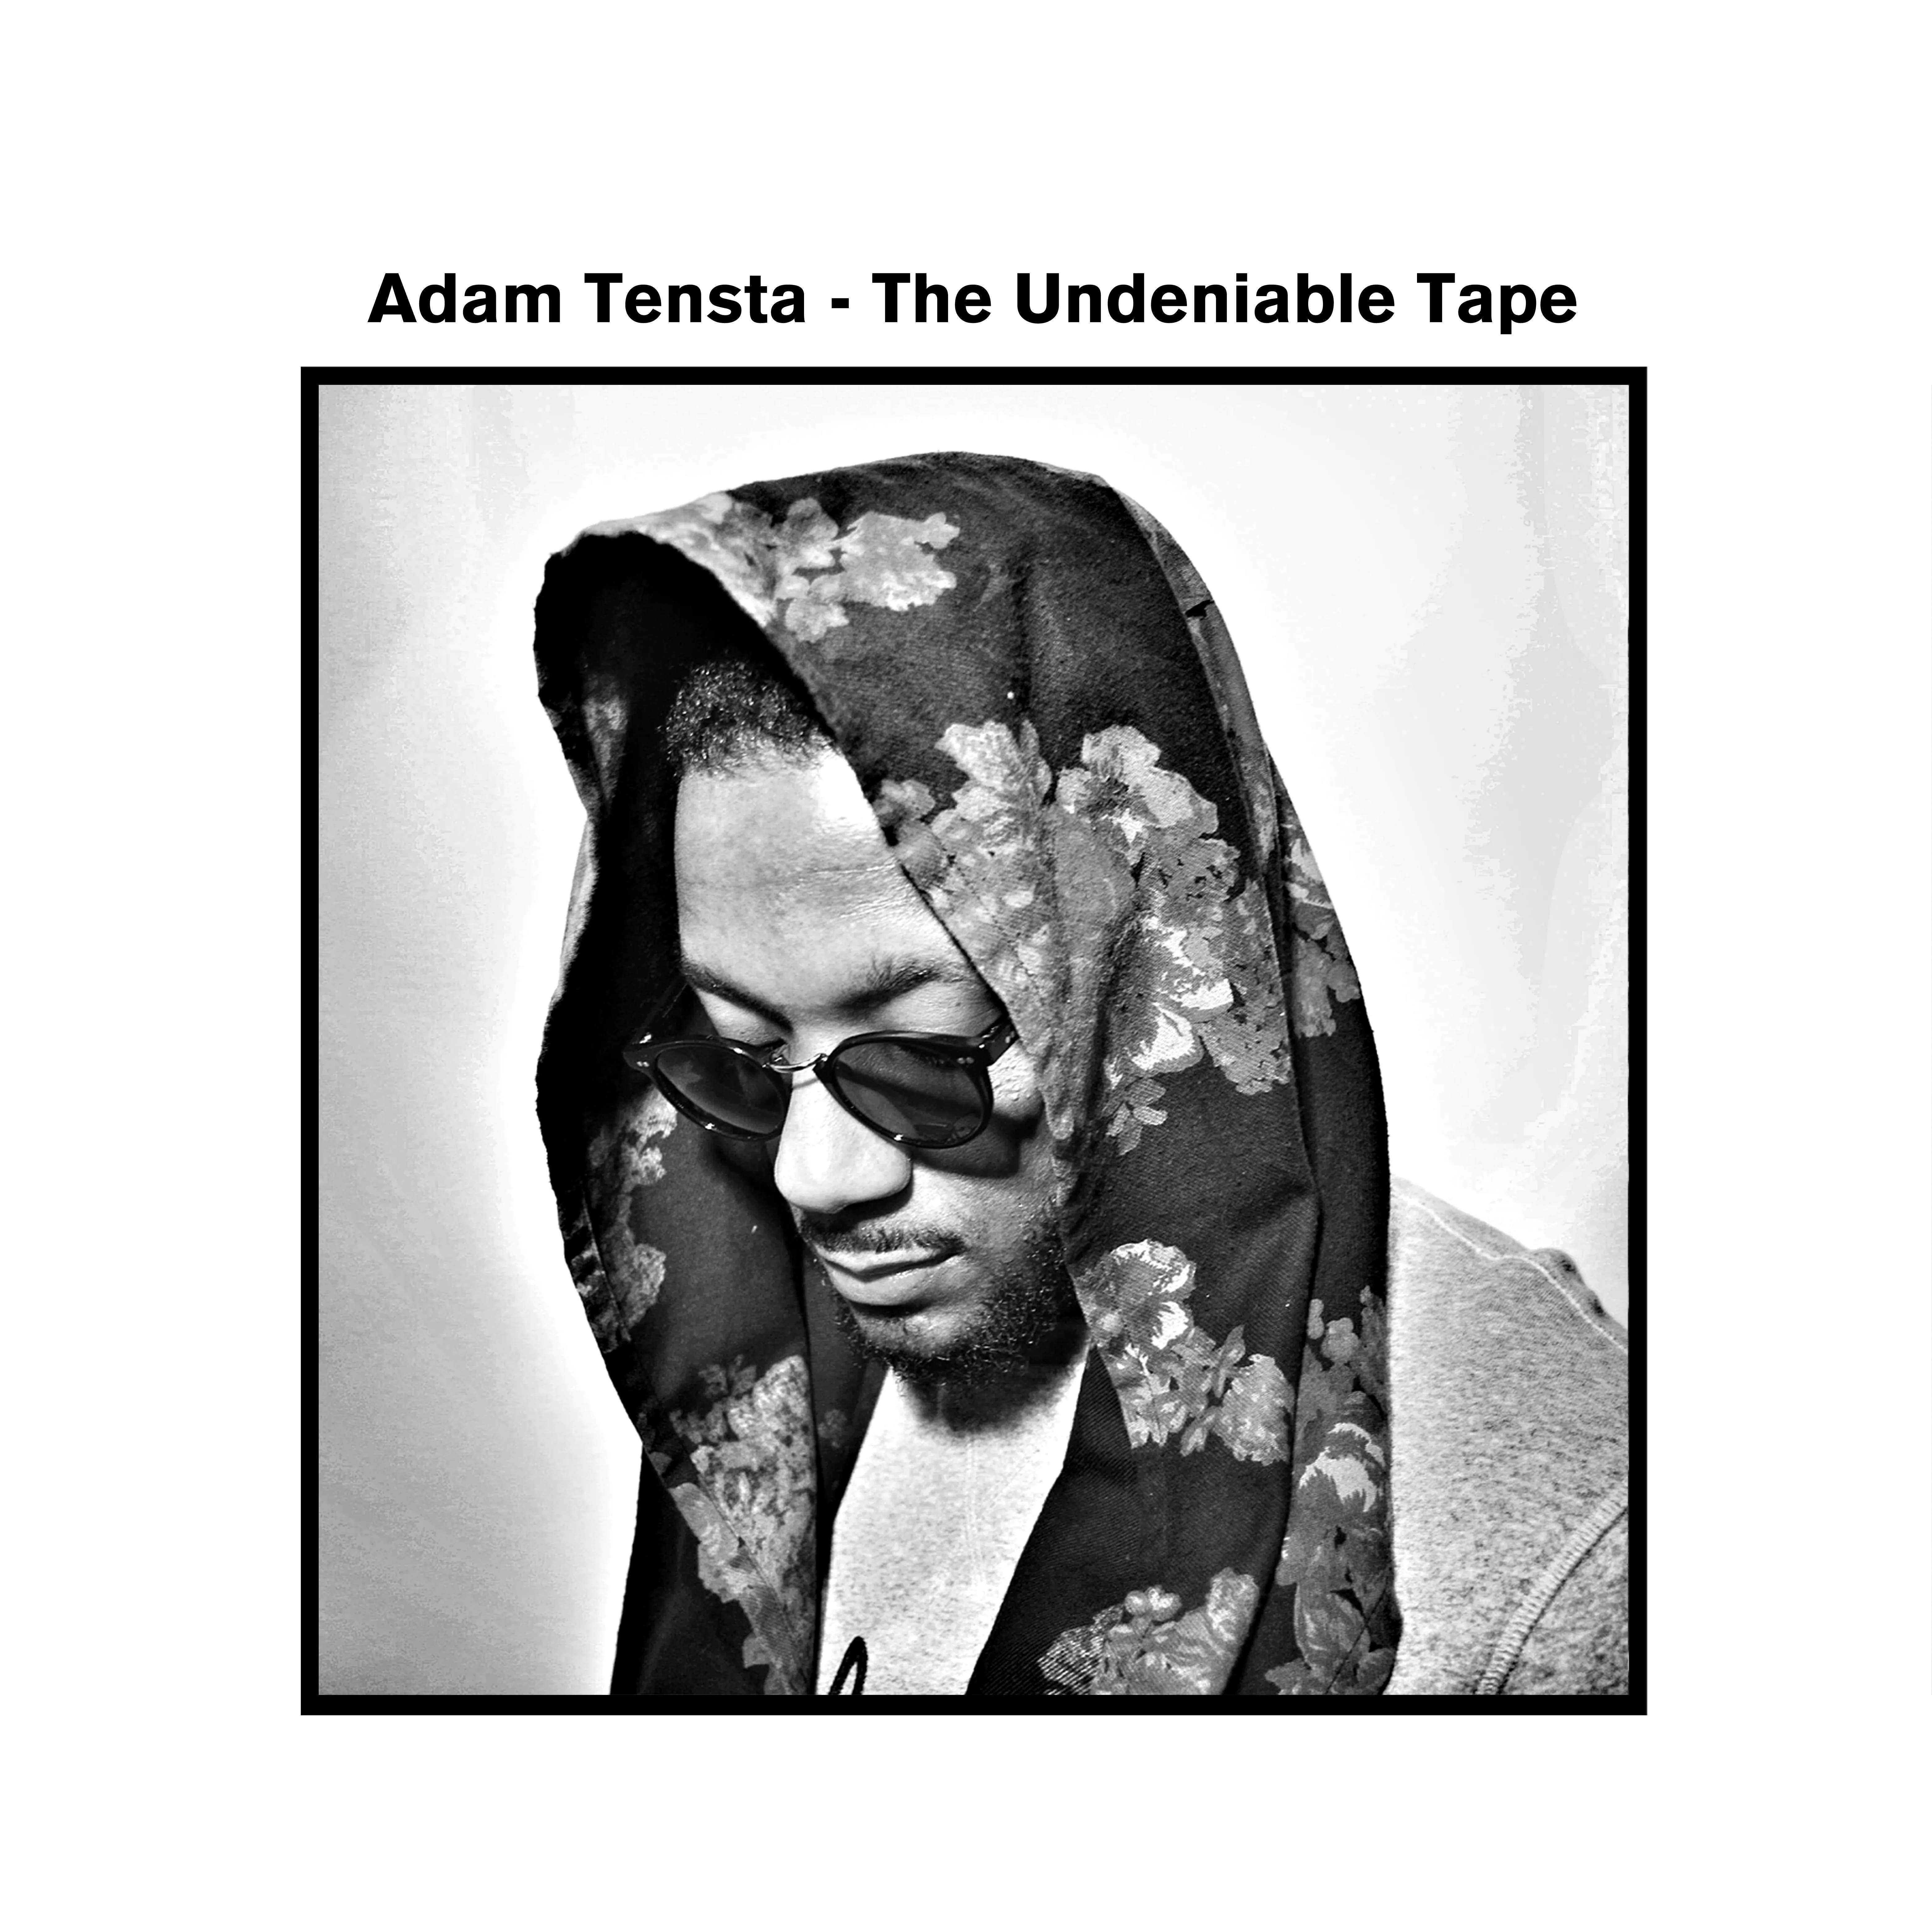 The Undeniable Tape - Adam Tensta